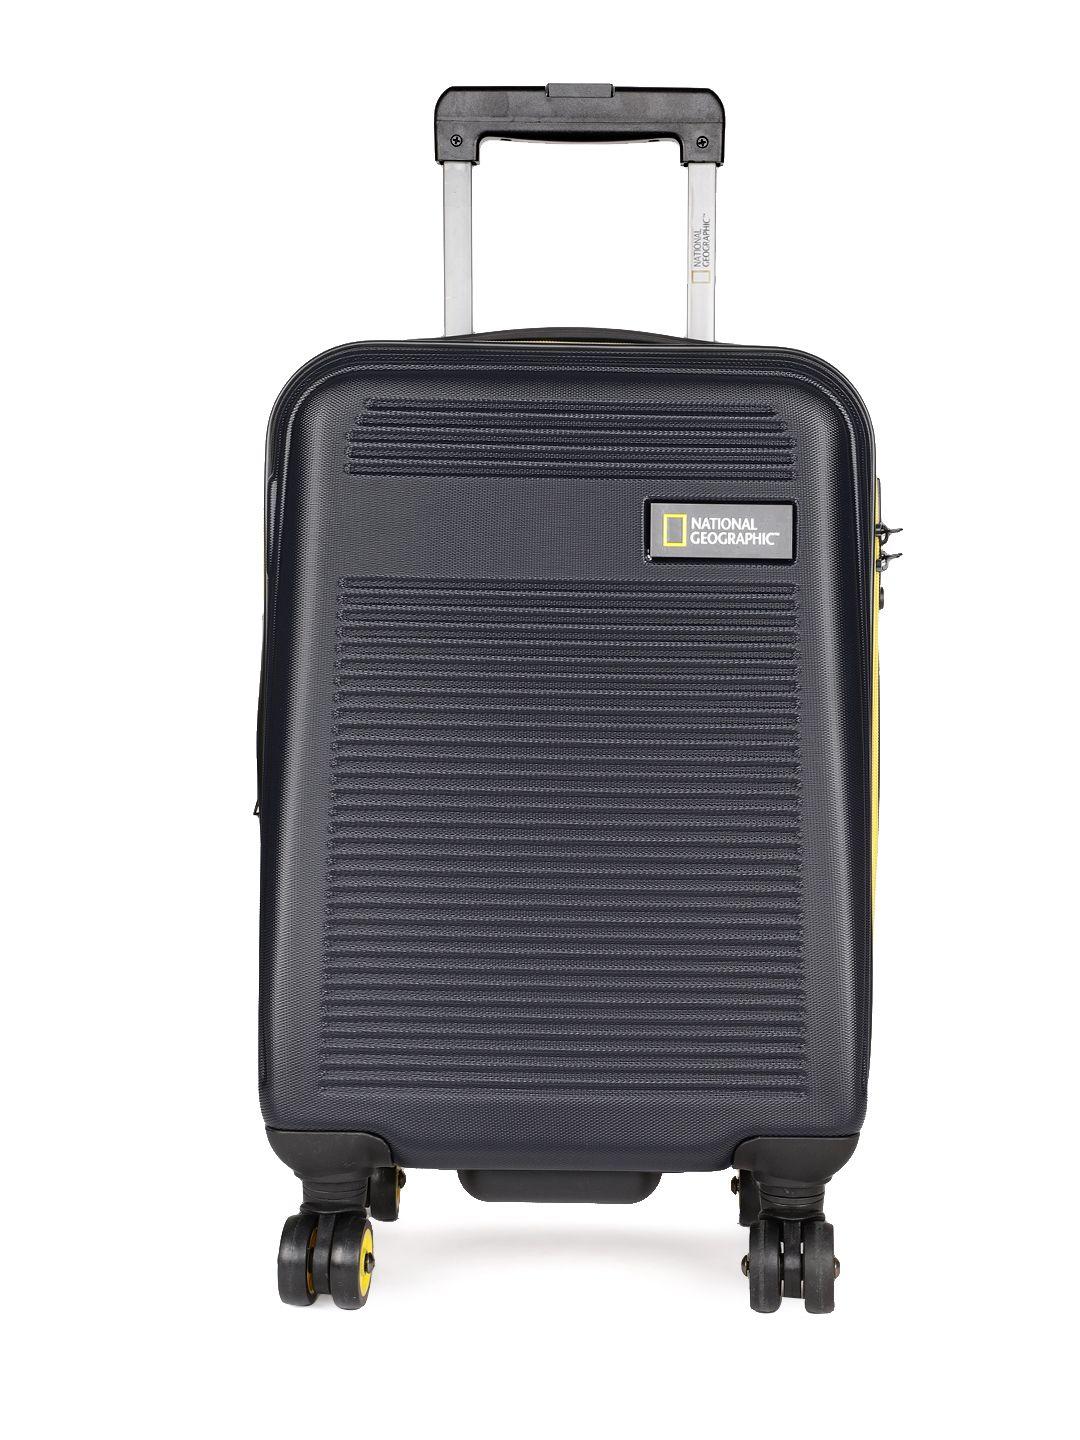 national geographic unisex black aerodrome cabin trolley suitcase